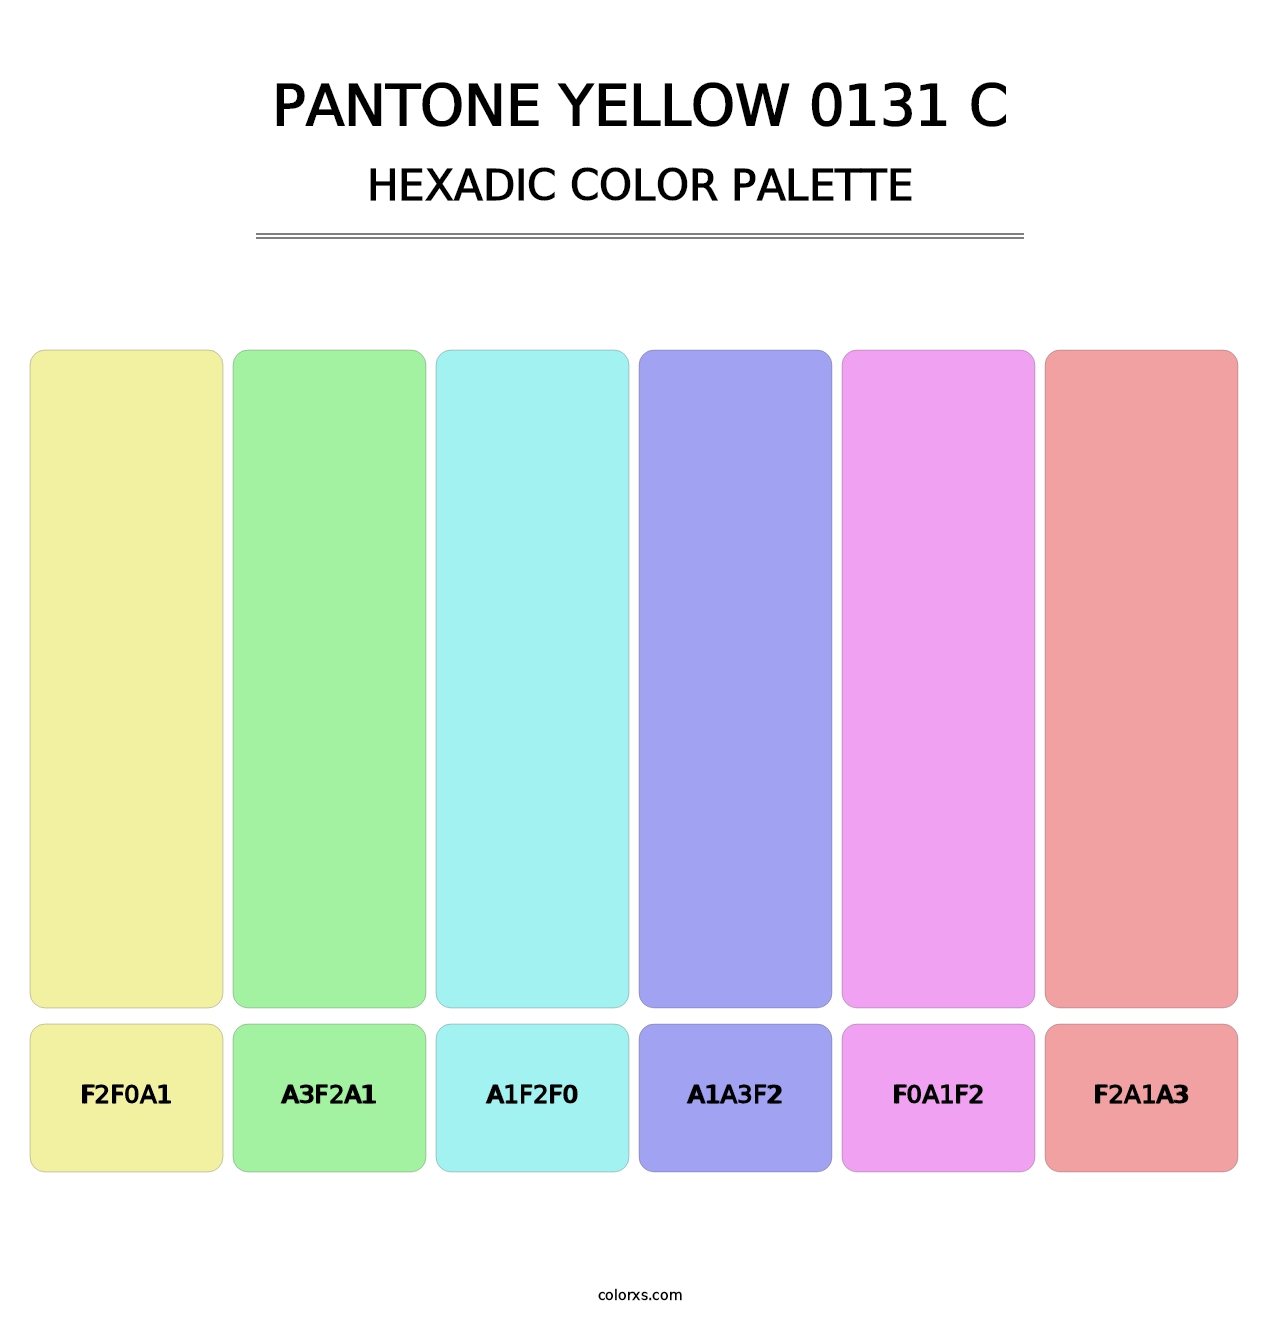 PANTONE Yellow 0131 C - Hexadic Color Palette